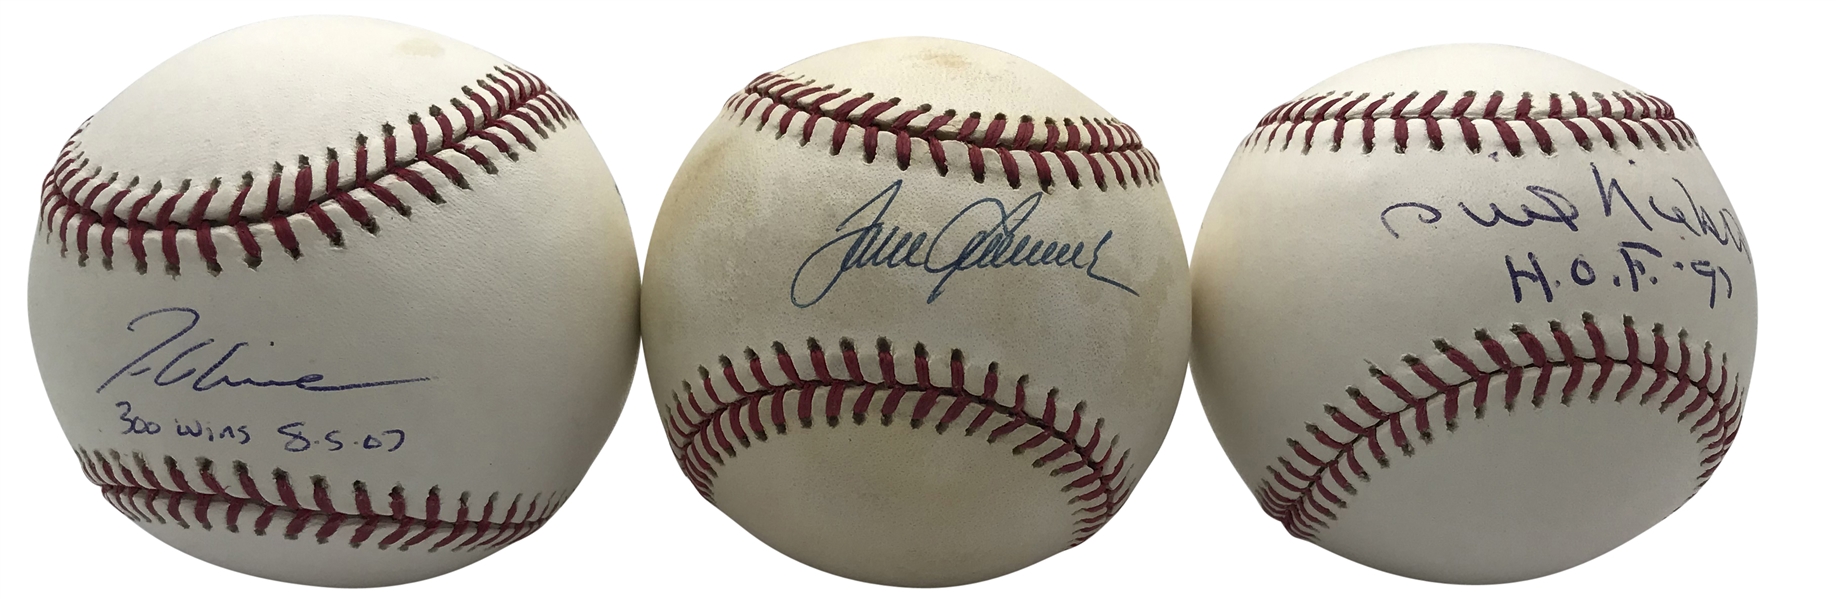 MLB Pitching Legends Lot of Six (6) Single Signed Baseballs w/ Seaver, Glavine & Others! (Beckett/BAS Guaranteed)